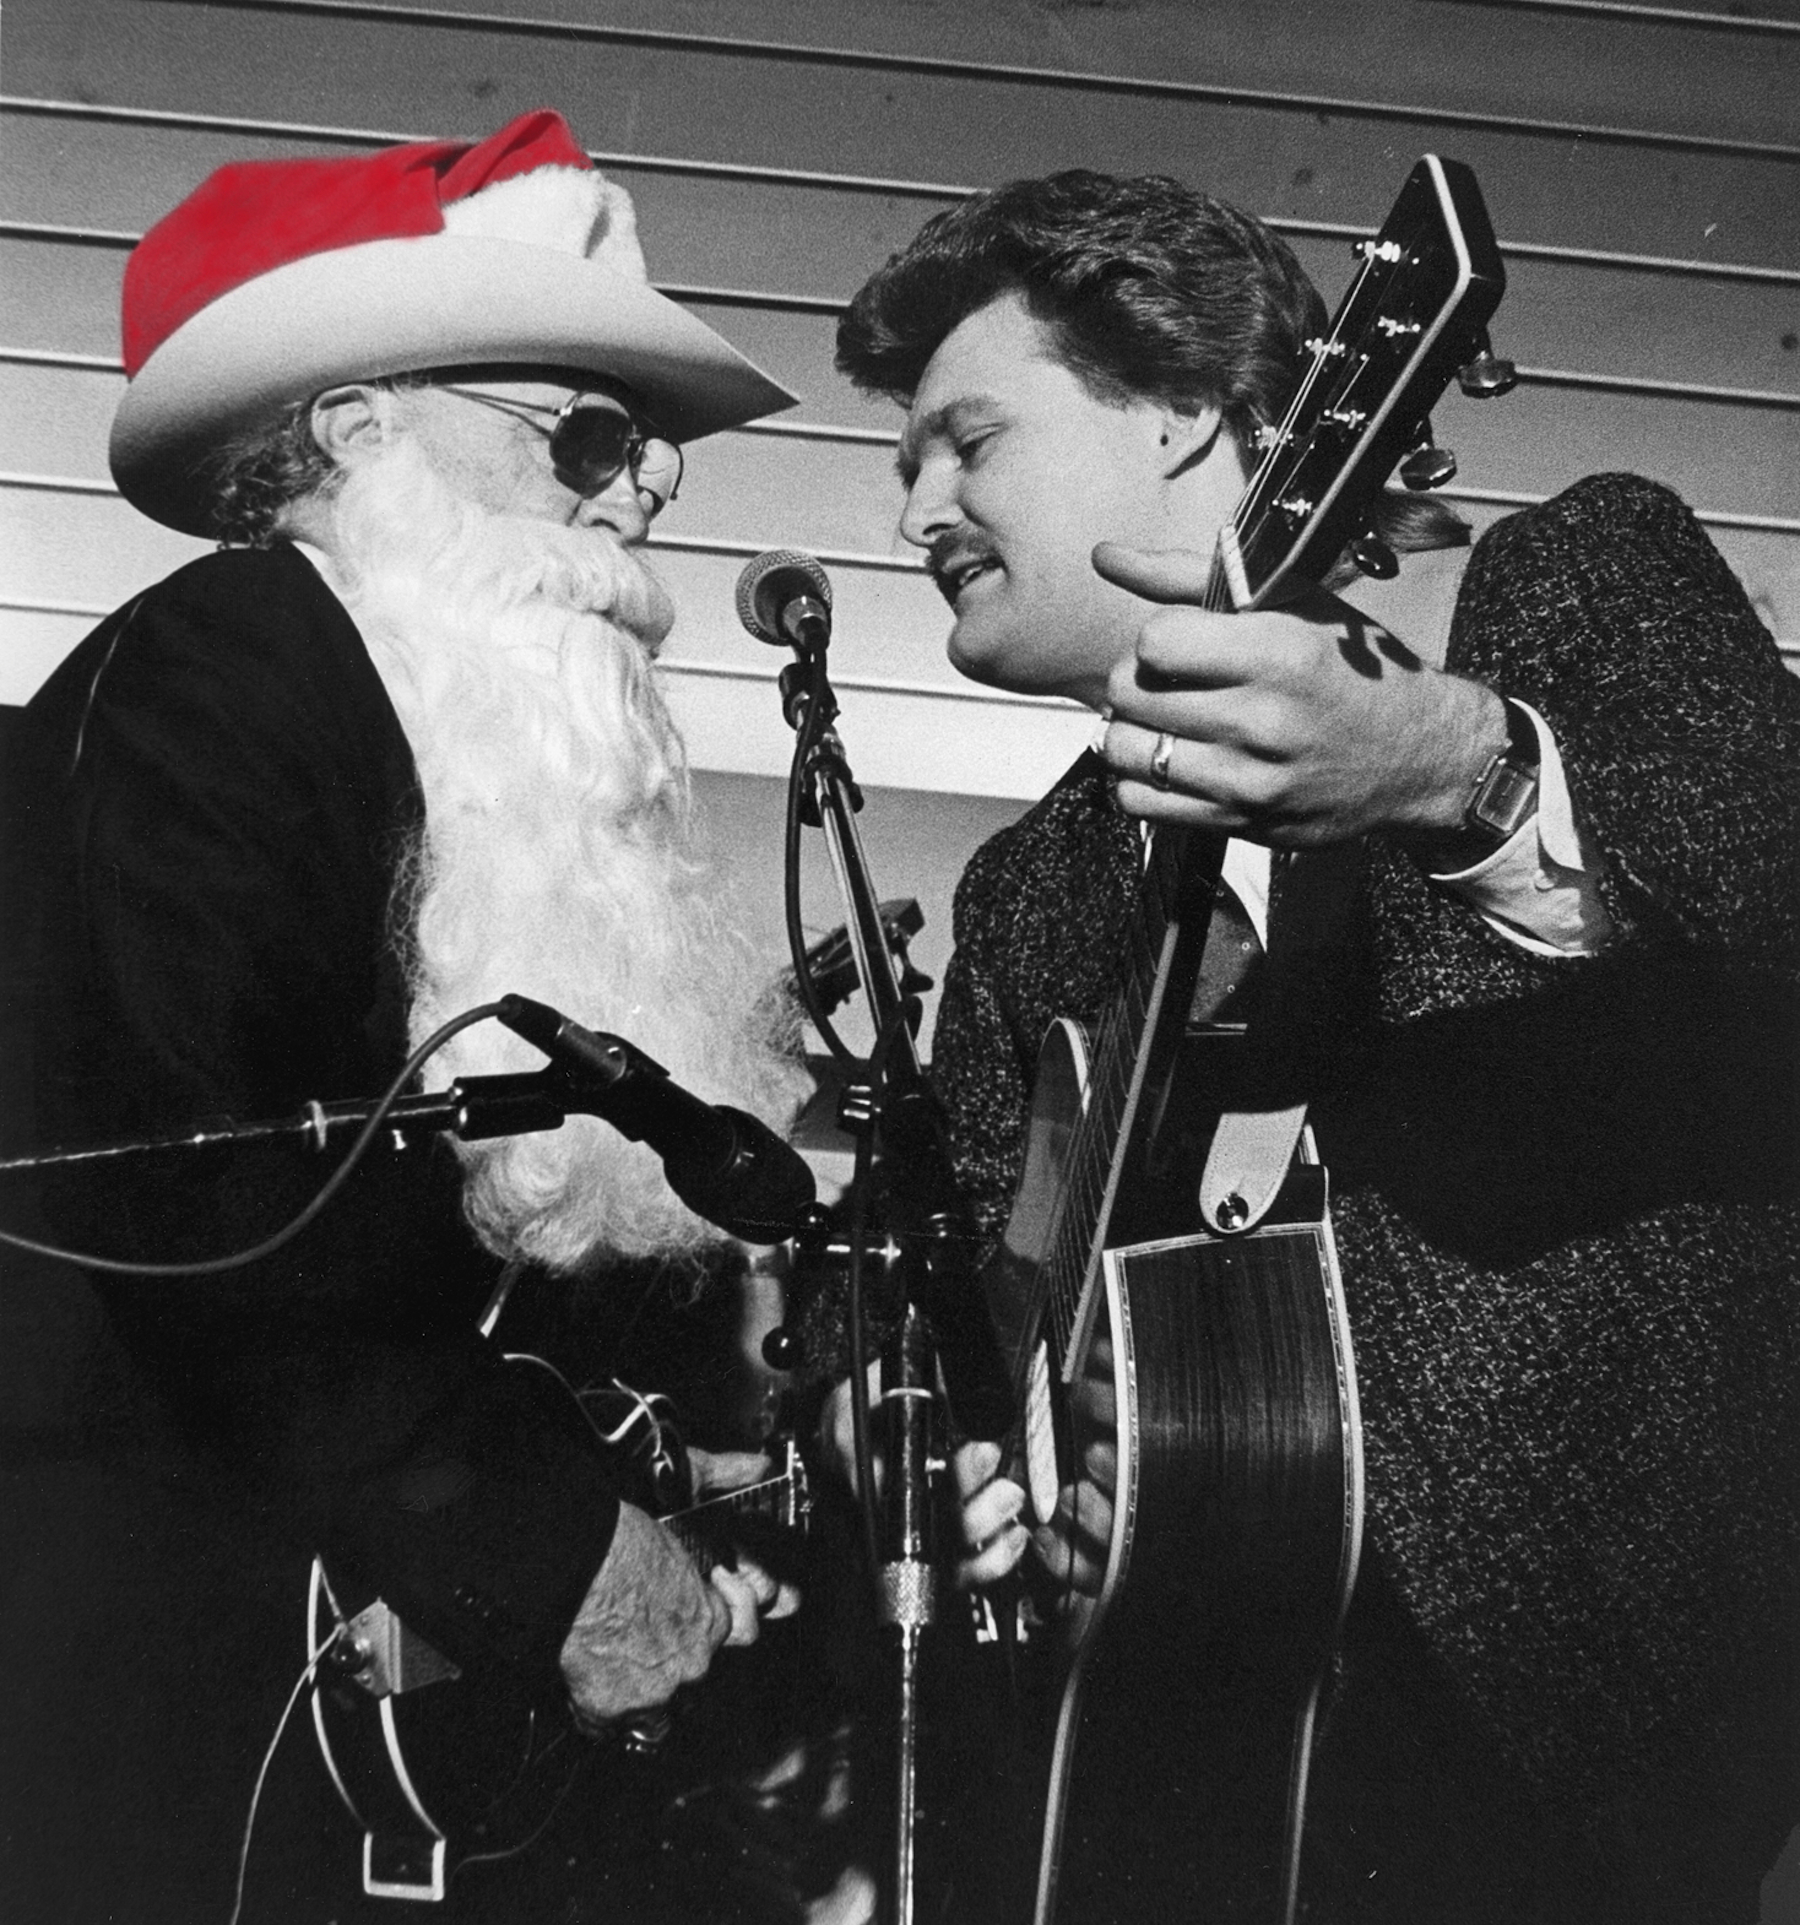 Santa Bill Monroe and Ricky Skaggs, Country Music Hall of Fame, Nashville, December 1, 1985